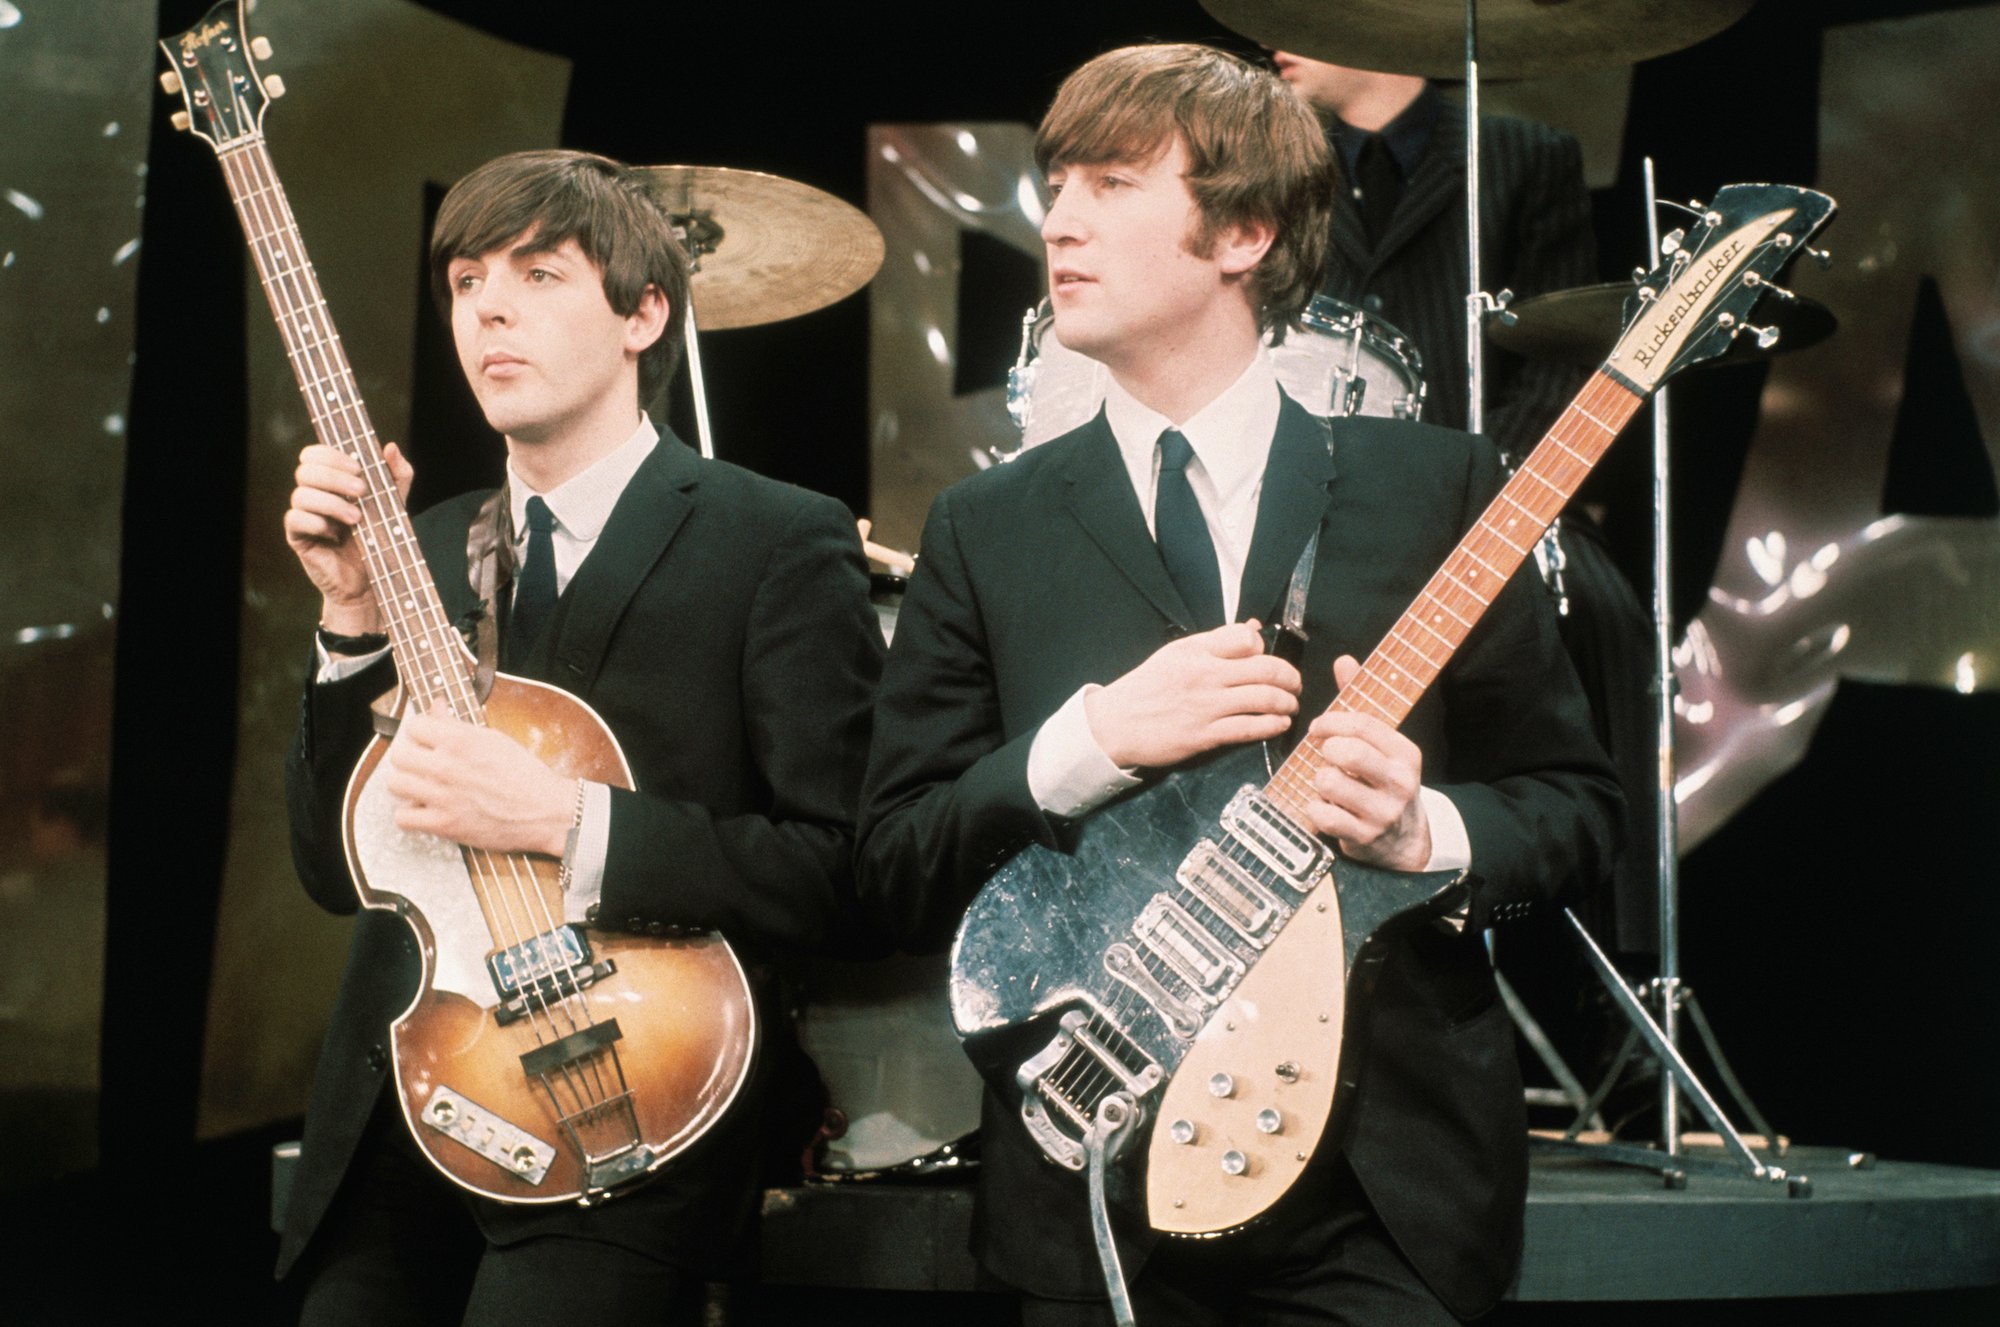 The Beatles Paul McCartney and John Lennon hold their guitars